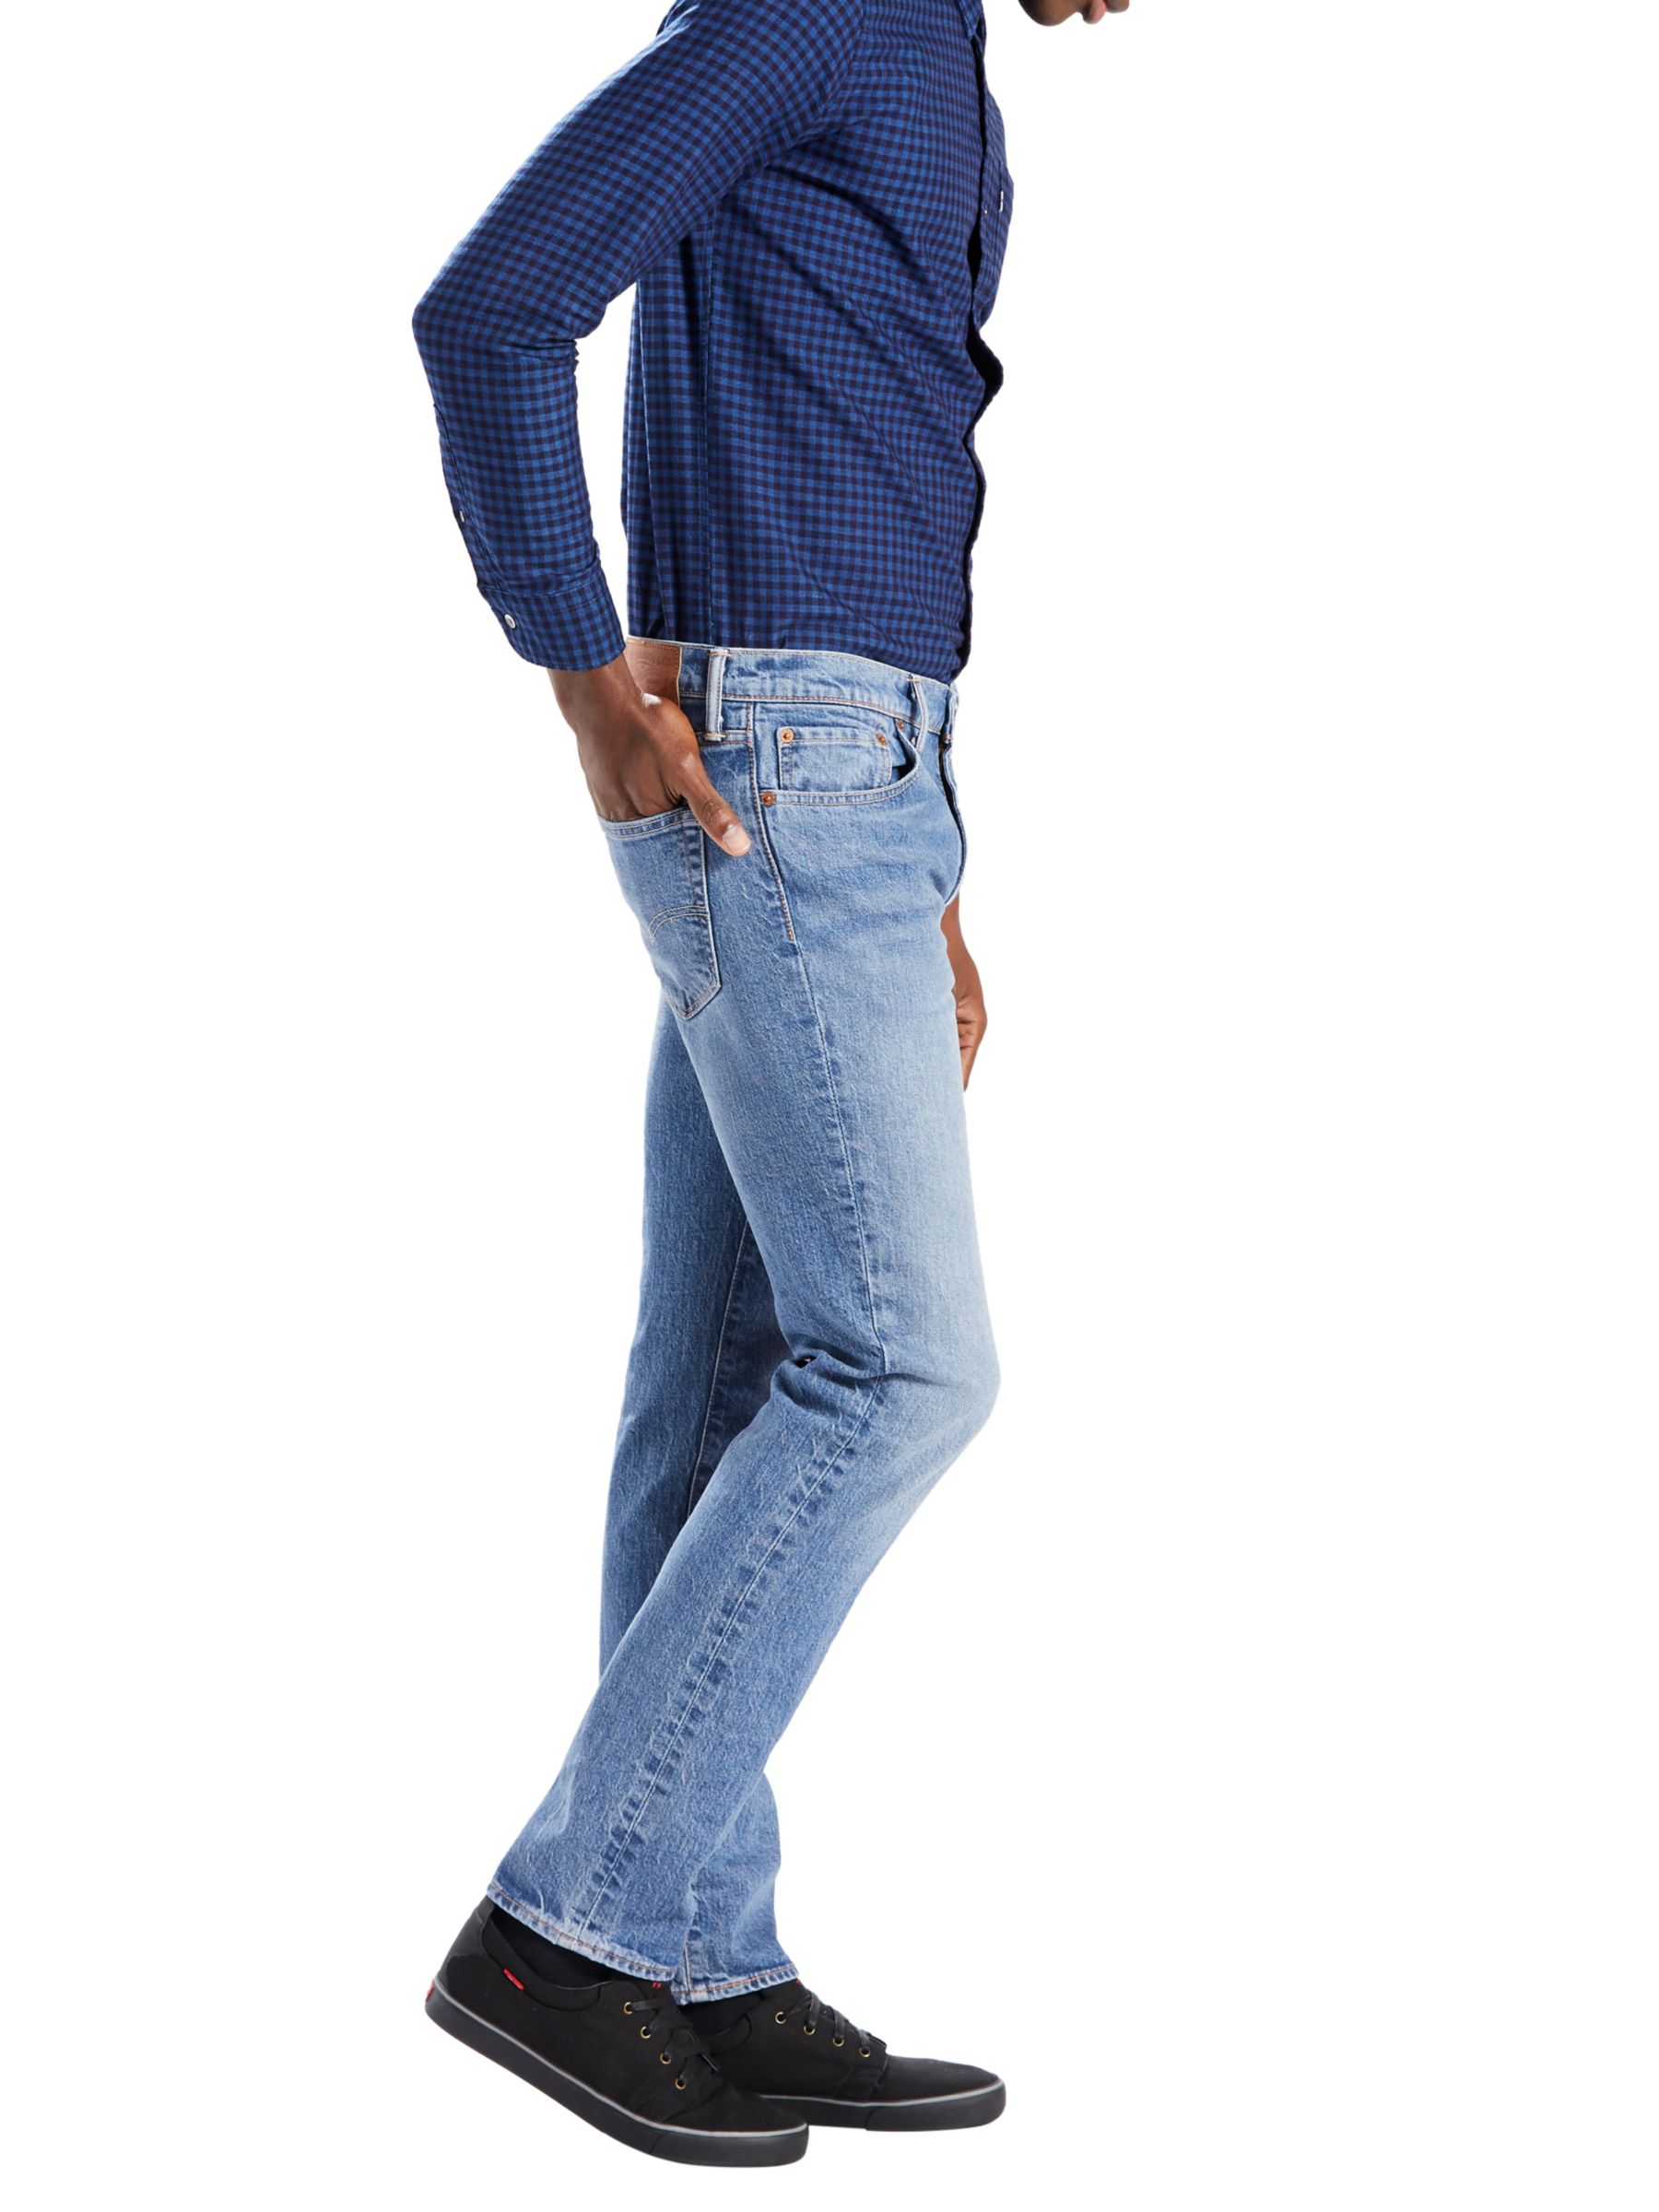 Levi's 511 Slim Jeans, Thunderbird at 